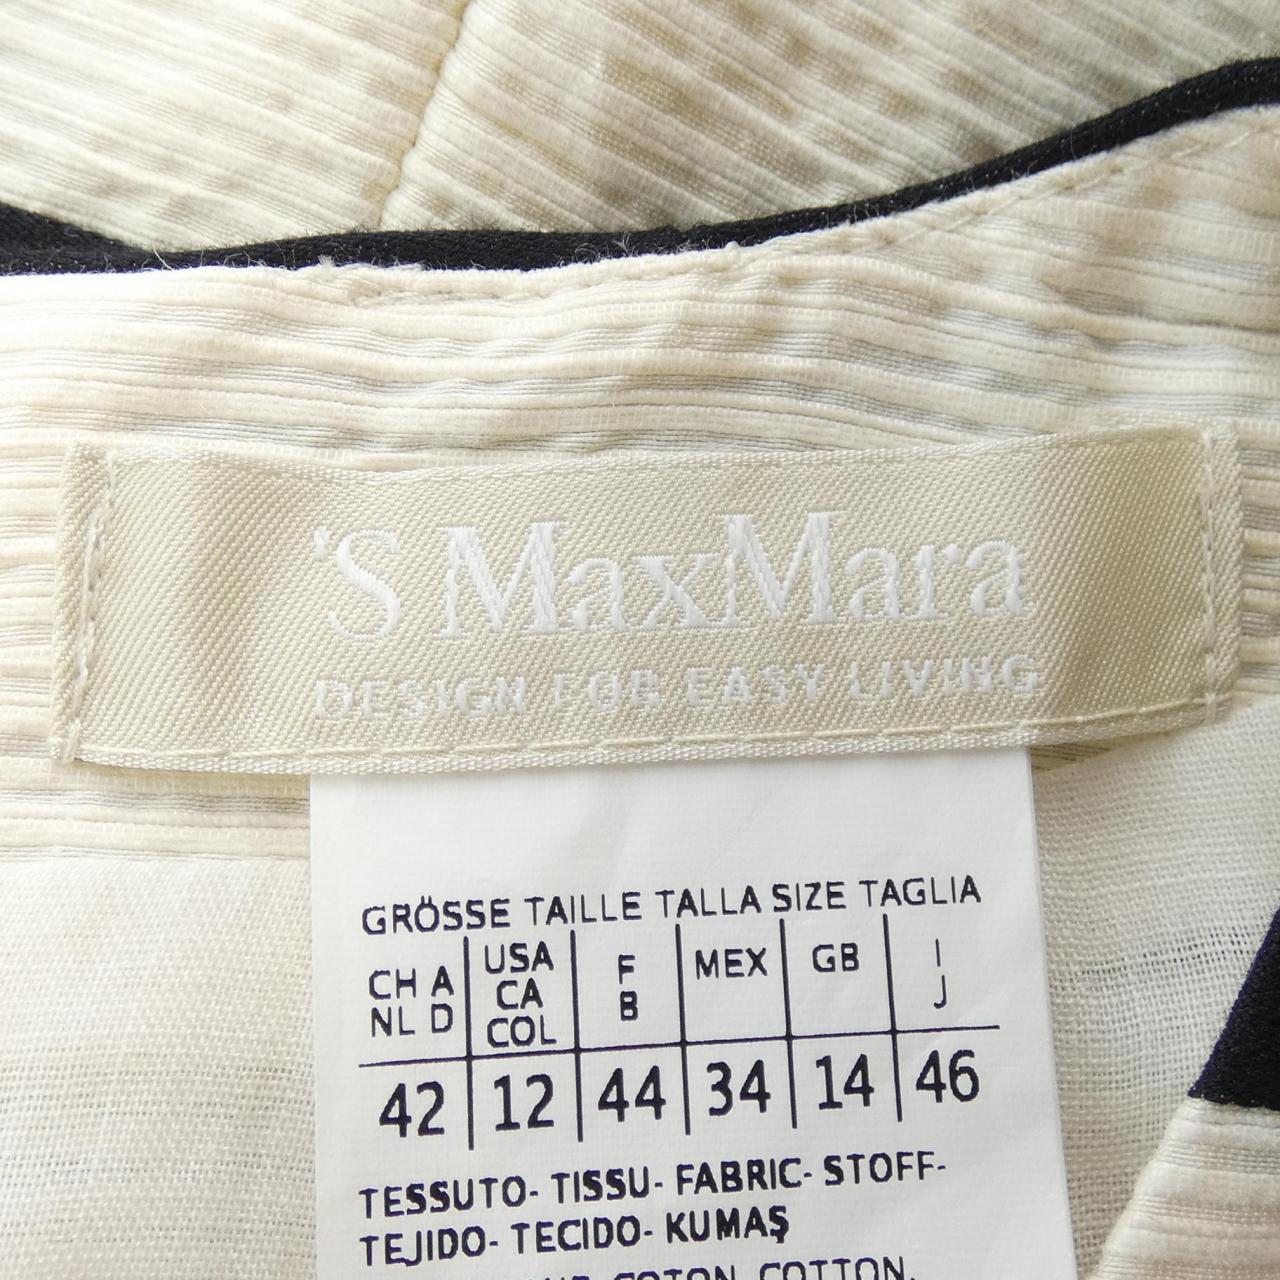 S Max Mara的馬克斯瑪拉海賊王